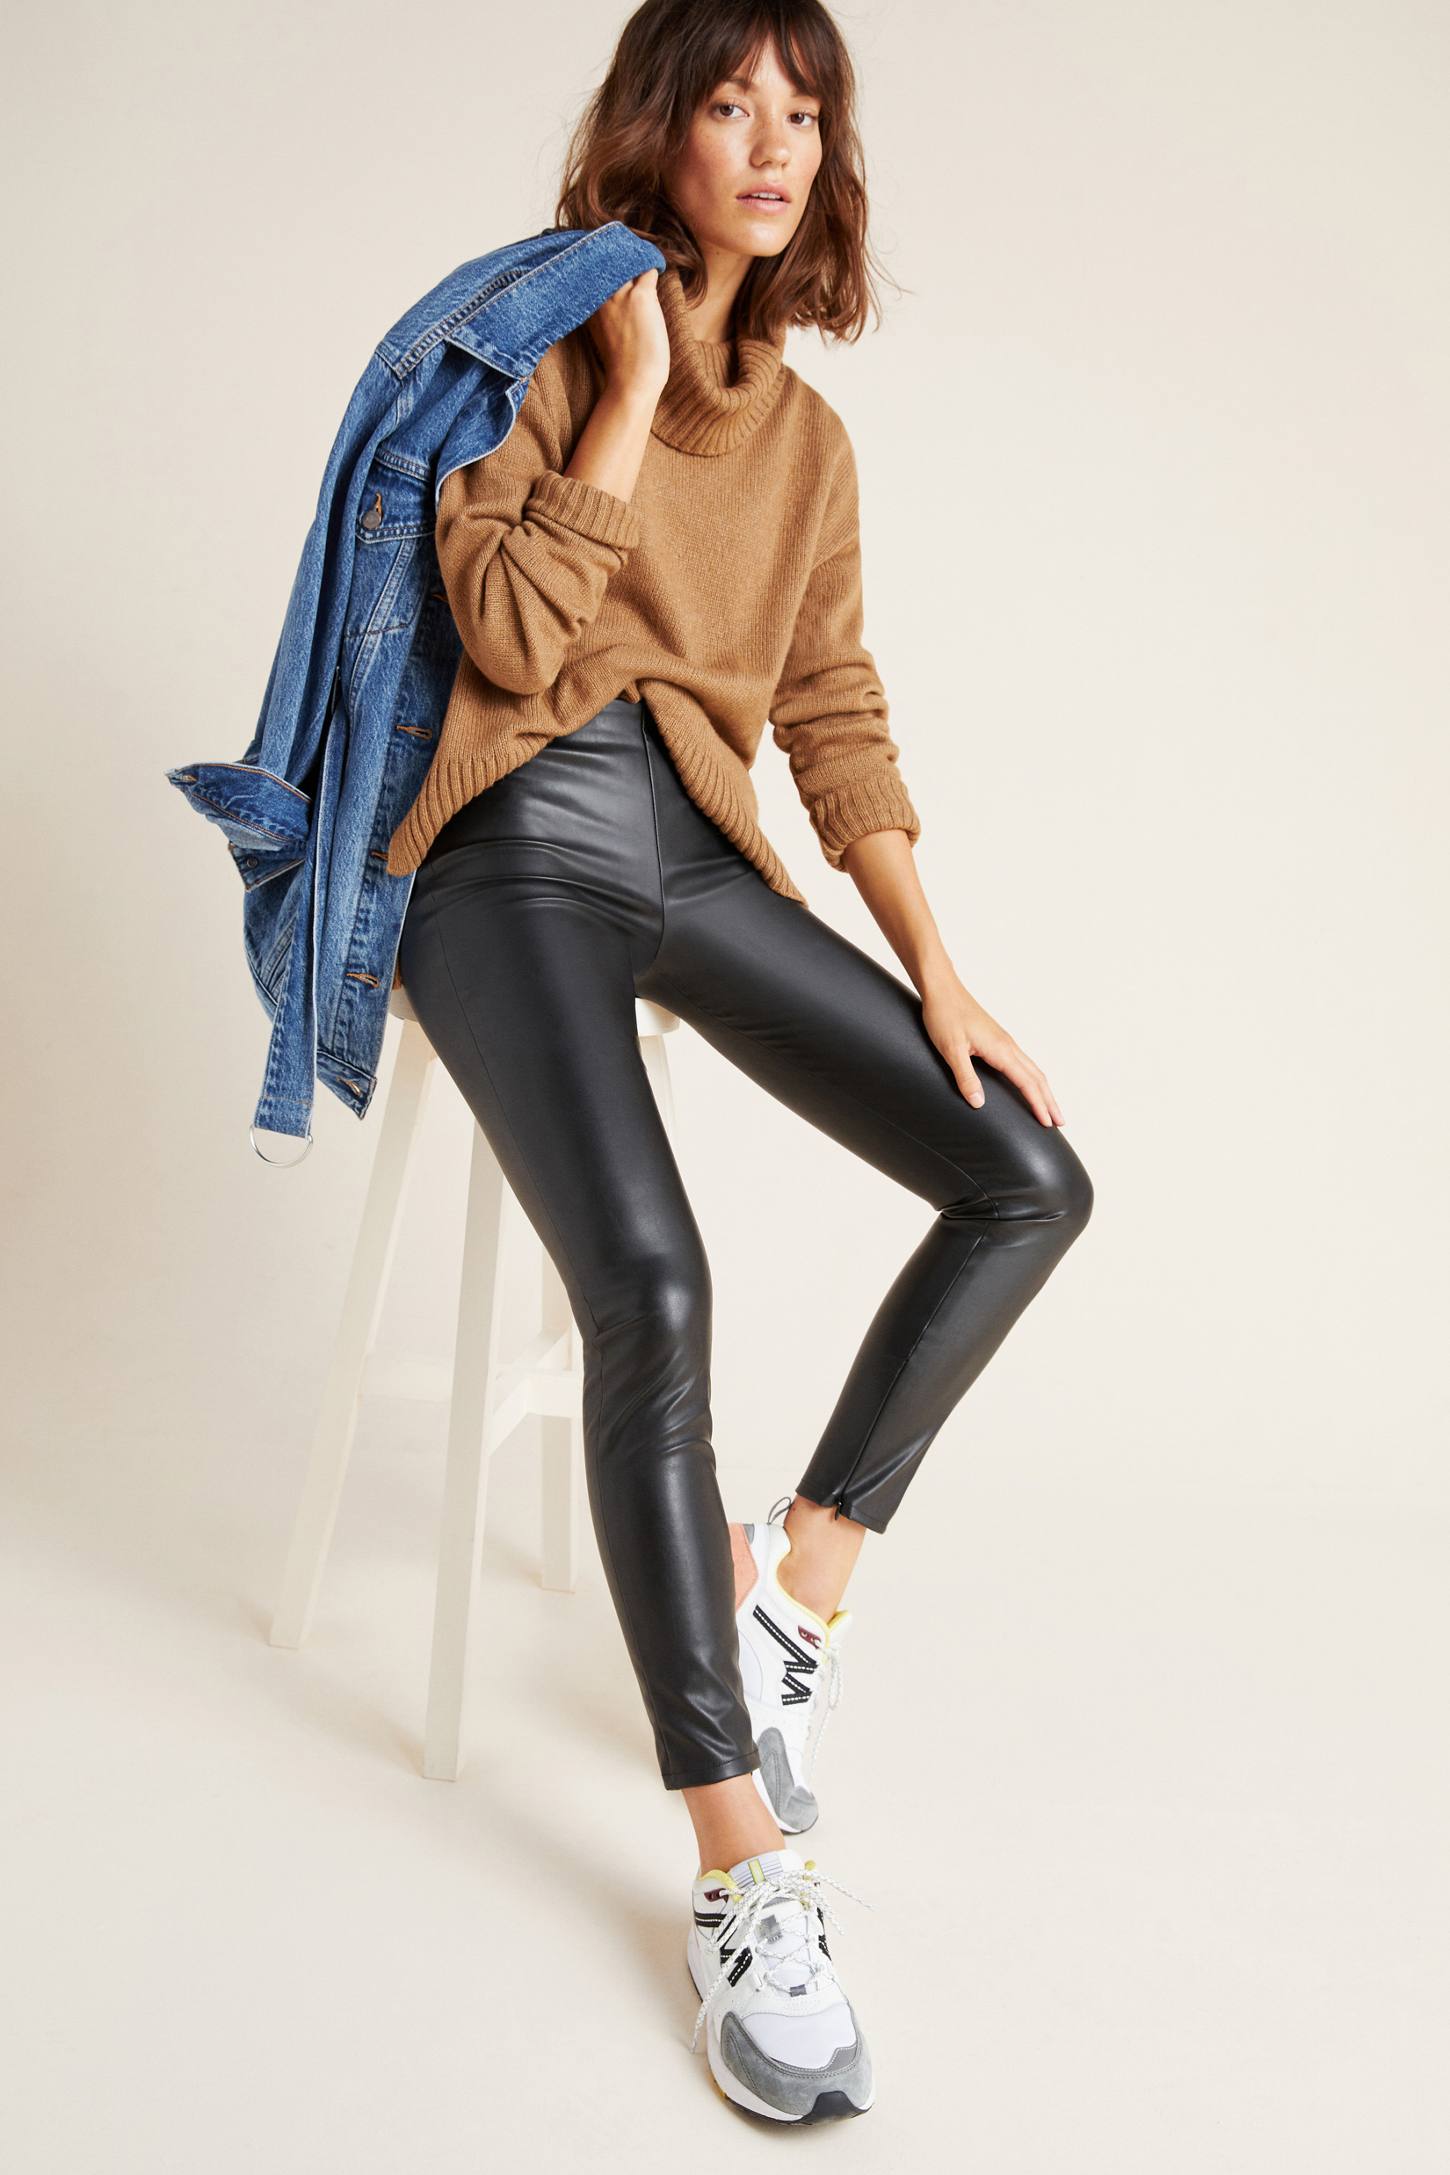 camel-sweater-faux-leather-leggings